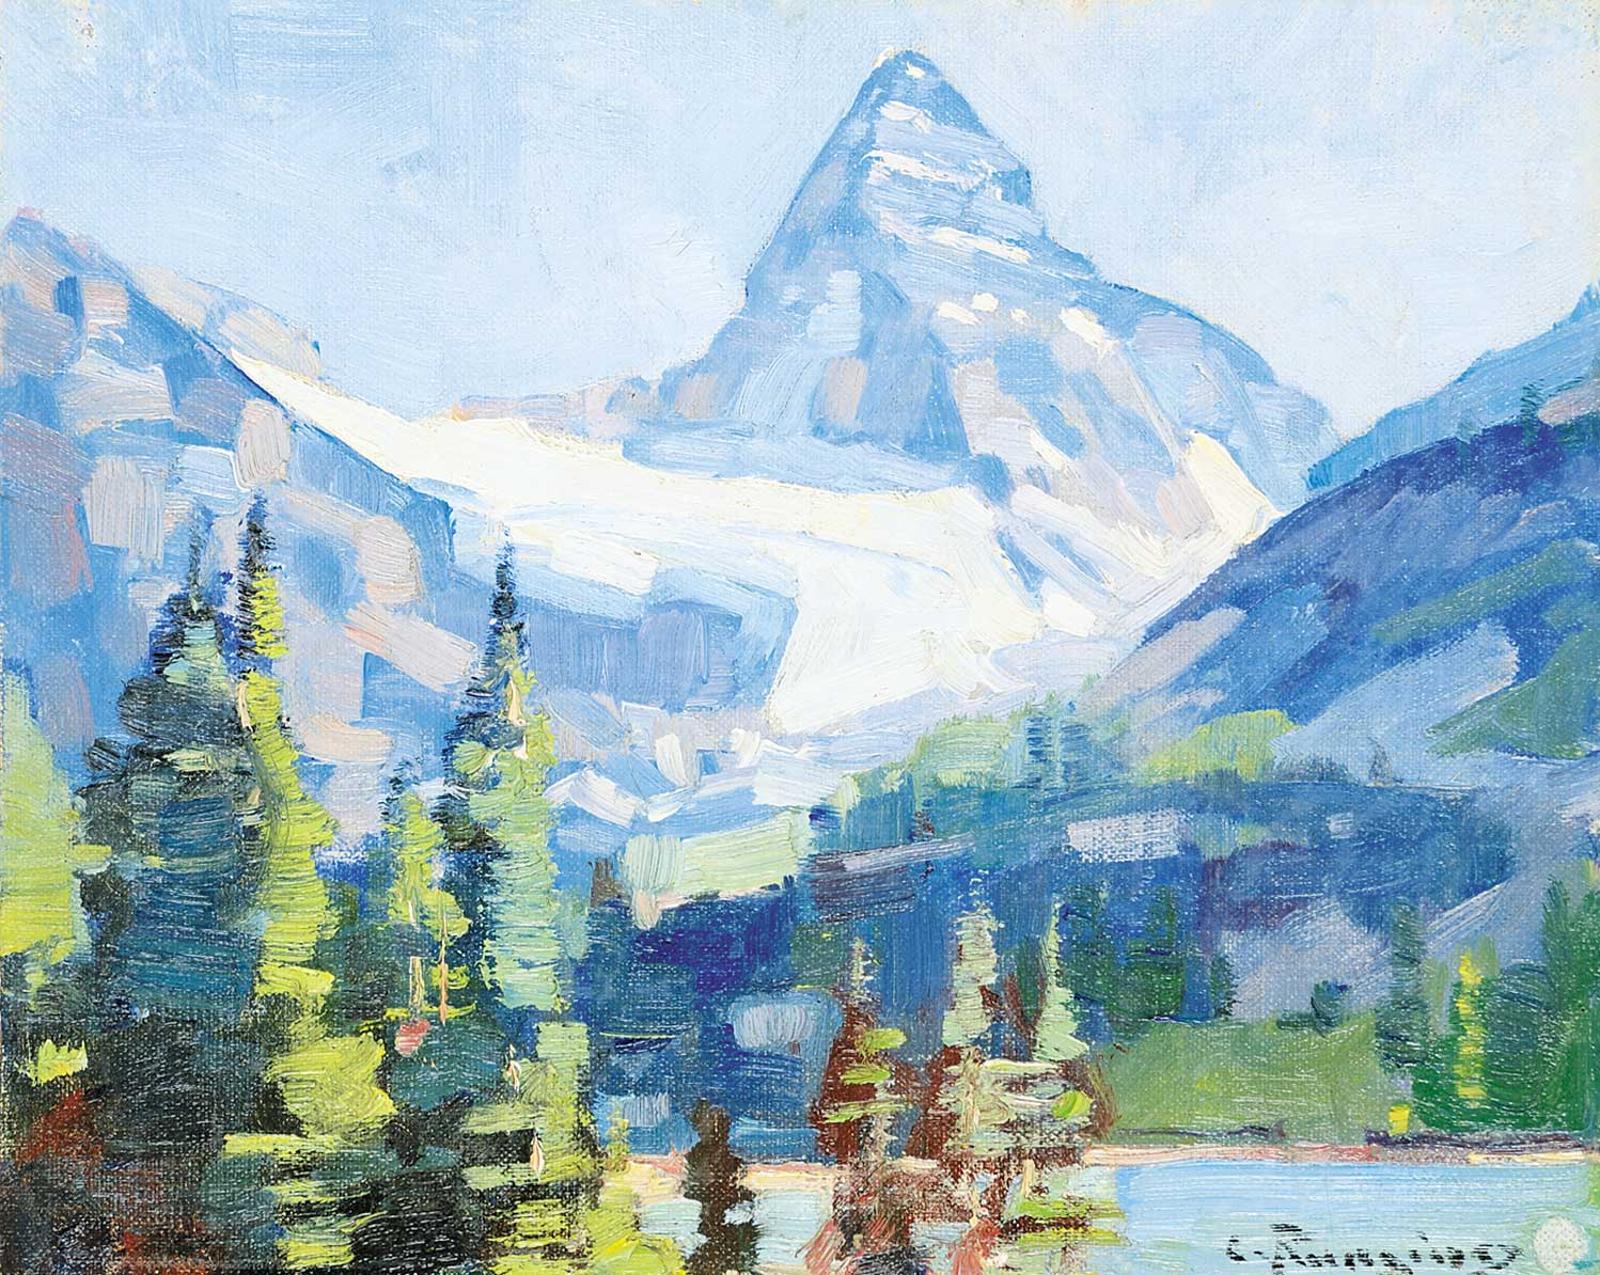 Carl Clemens Moritz Rungius (1869-1959) - Untitled - Mount Assiniboine from Sunburst Lake